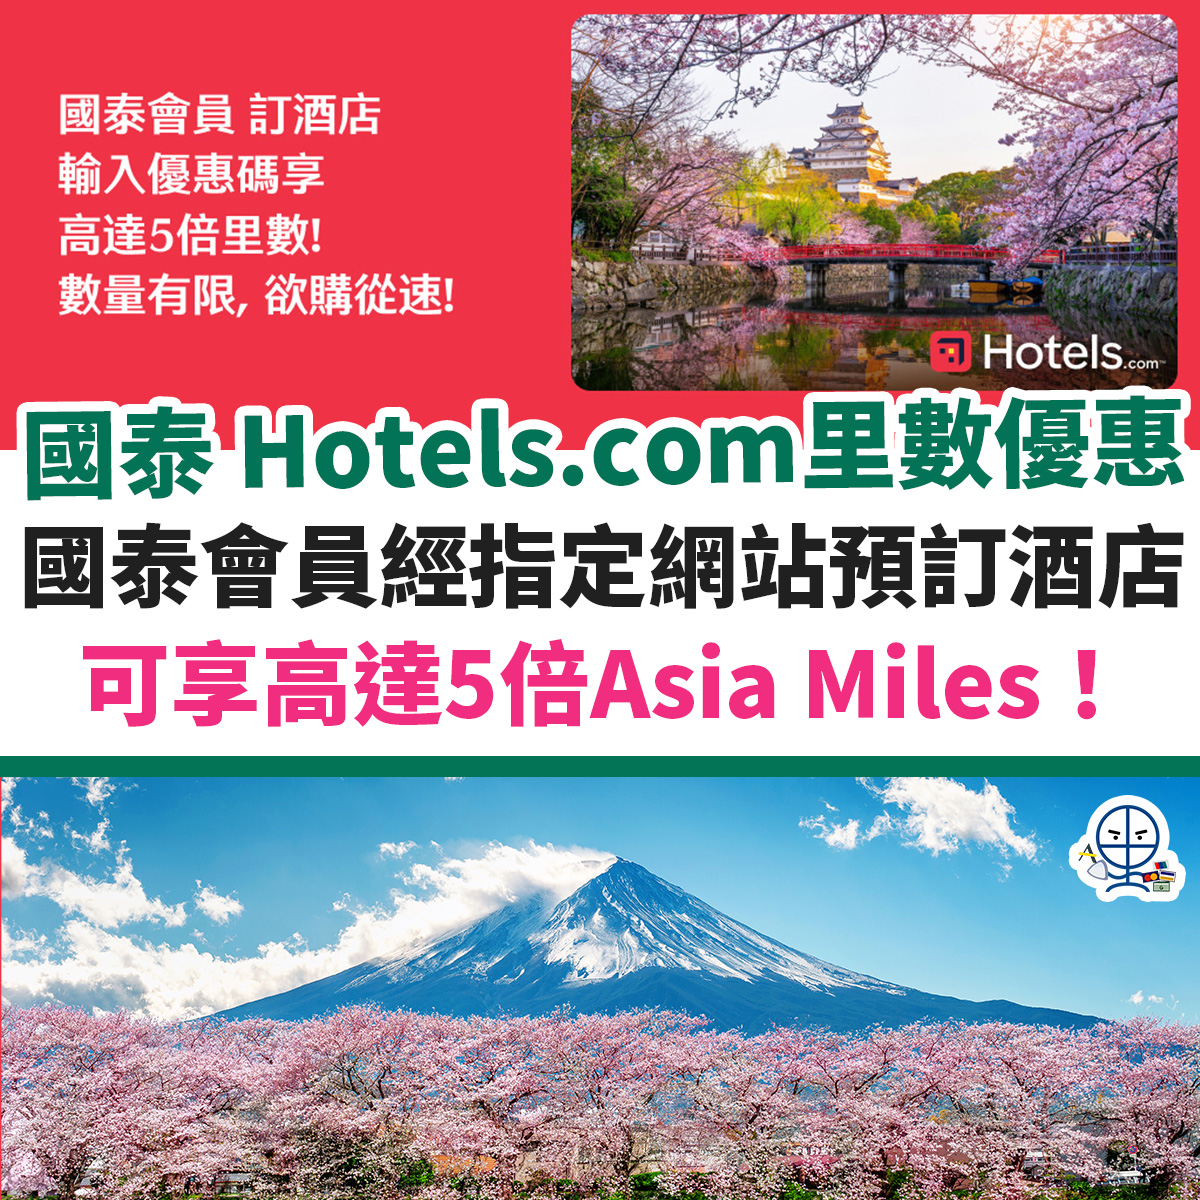 Asia Miles Hotels.com 優惠︱國泰會員預訂酒店可享高達5倍「亞洲萬里通」里數！